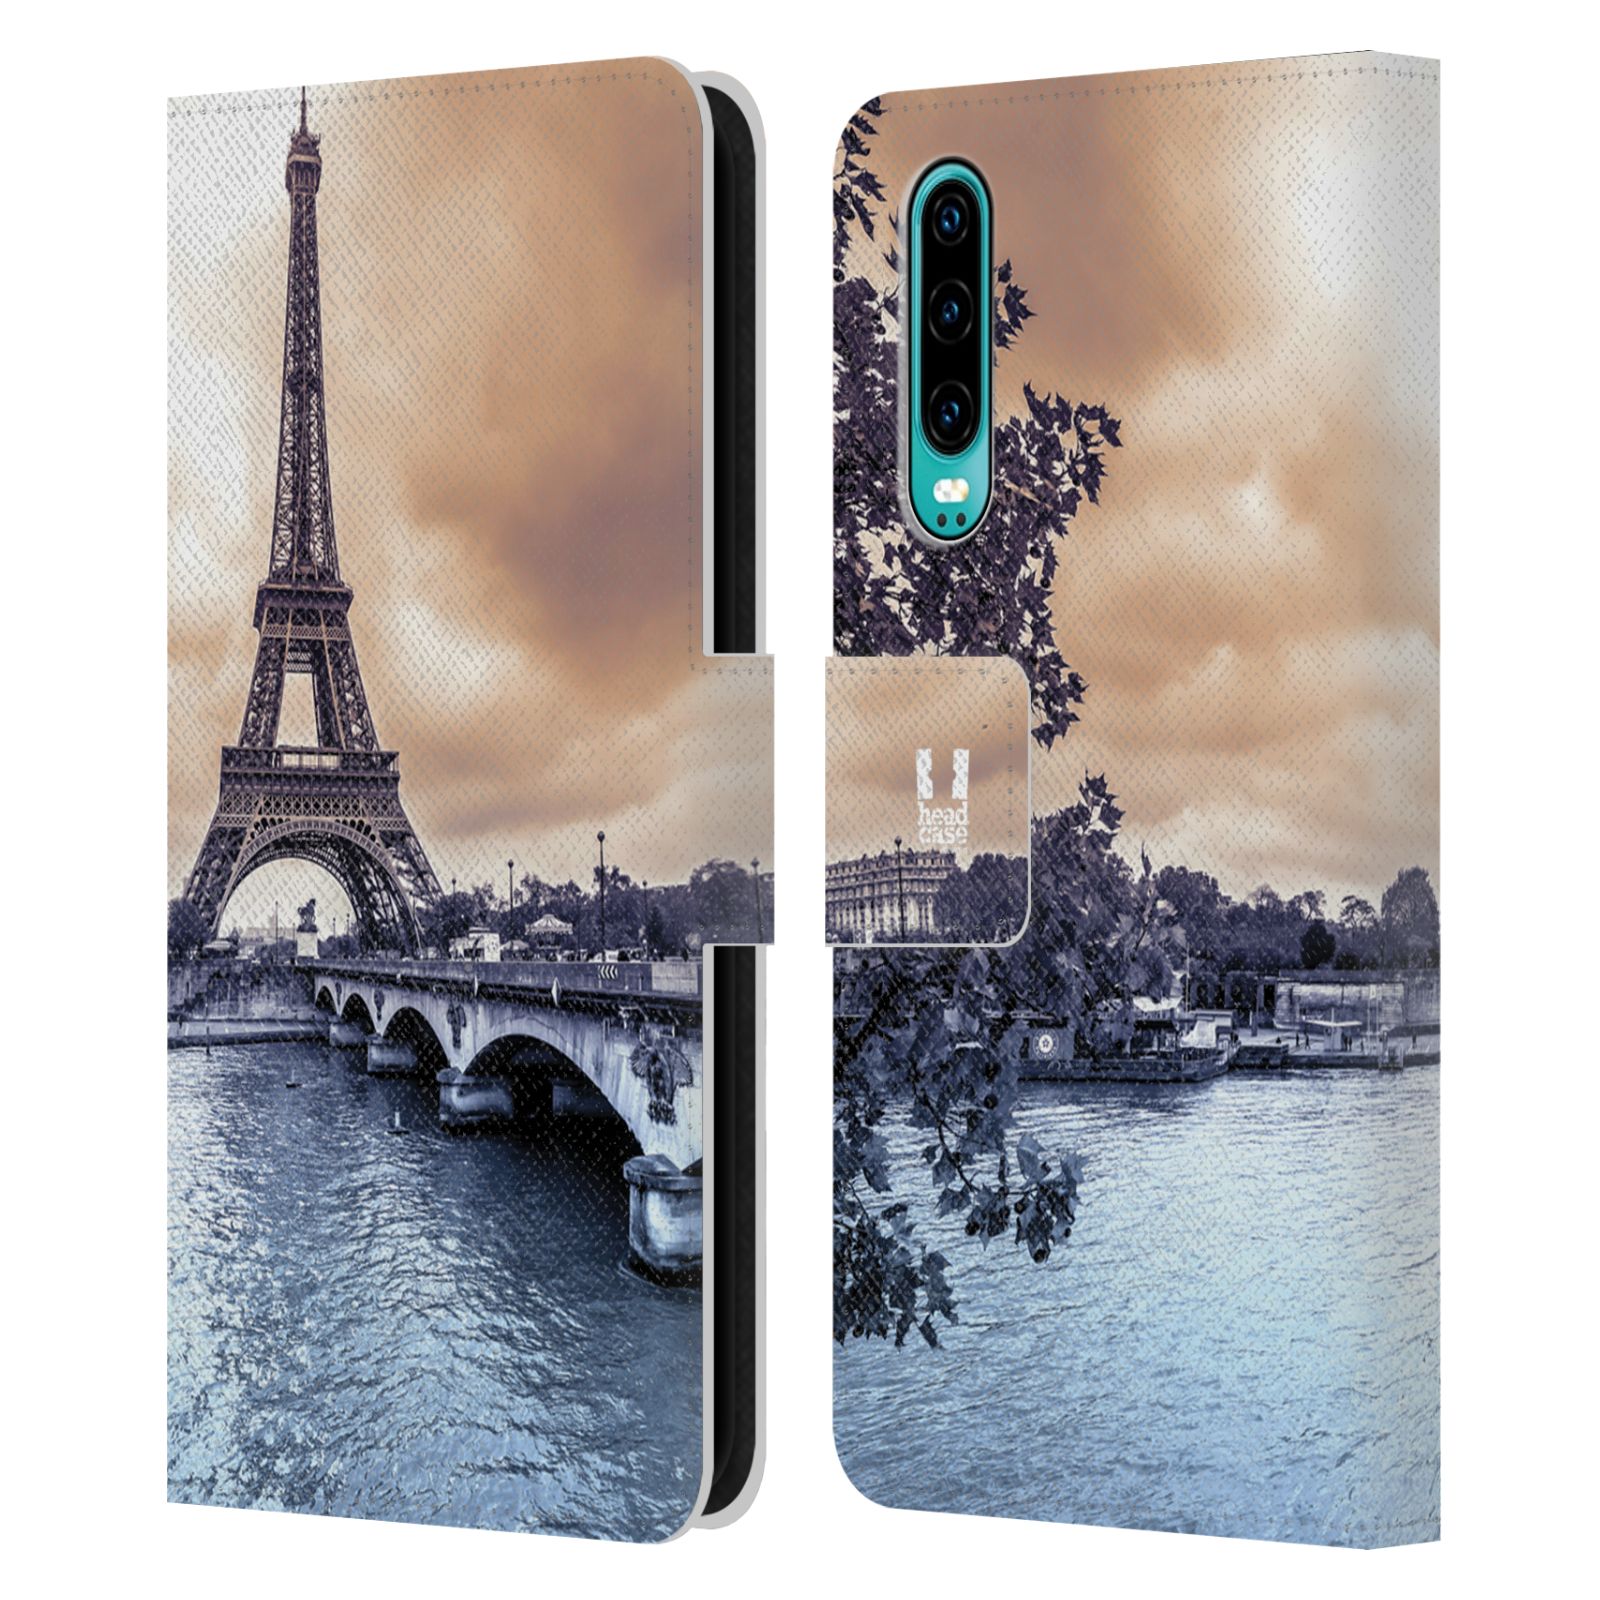 Pouzdro pro mobil Huawei P30 - Eiffelova věž Paříž - Francie